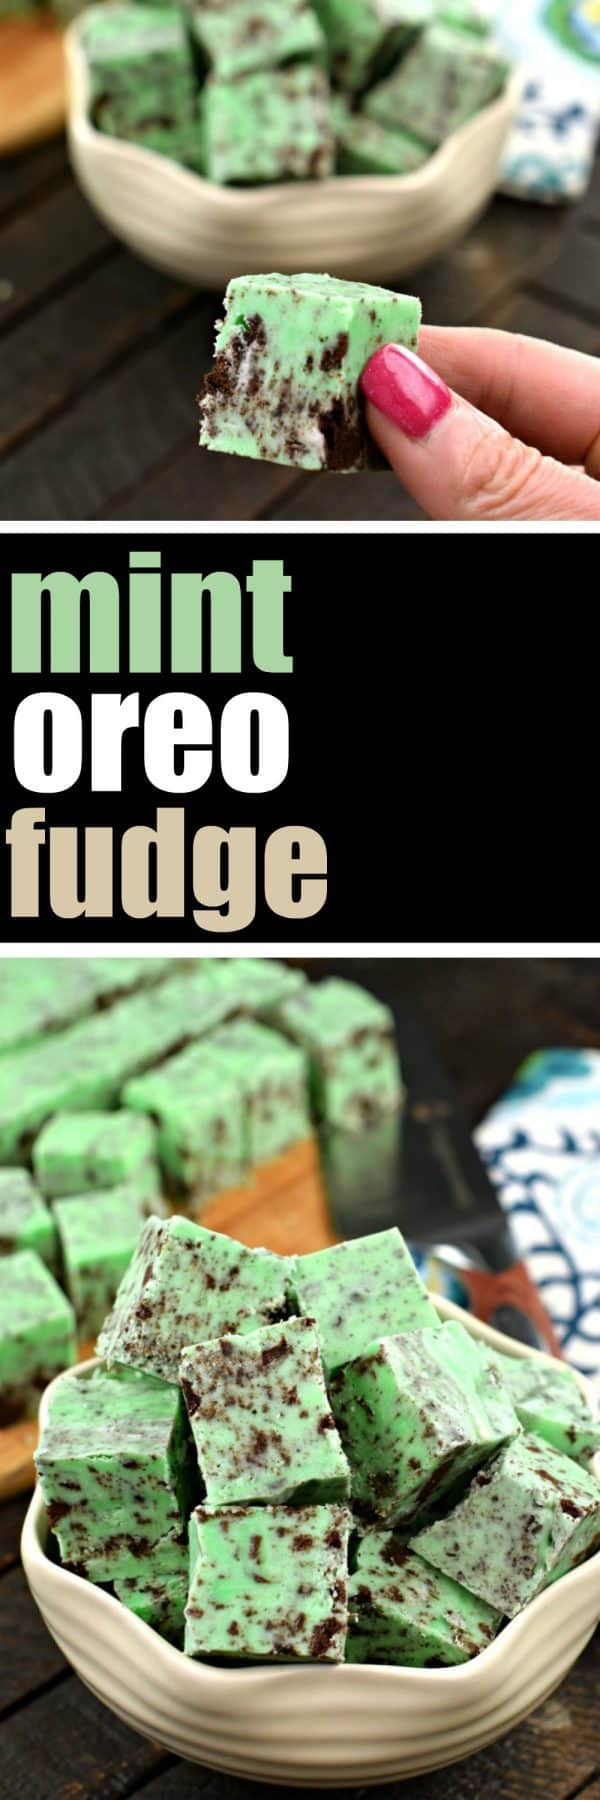 Mint Chocolate Oreo Fudge recipe photo collage with text